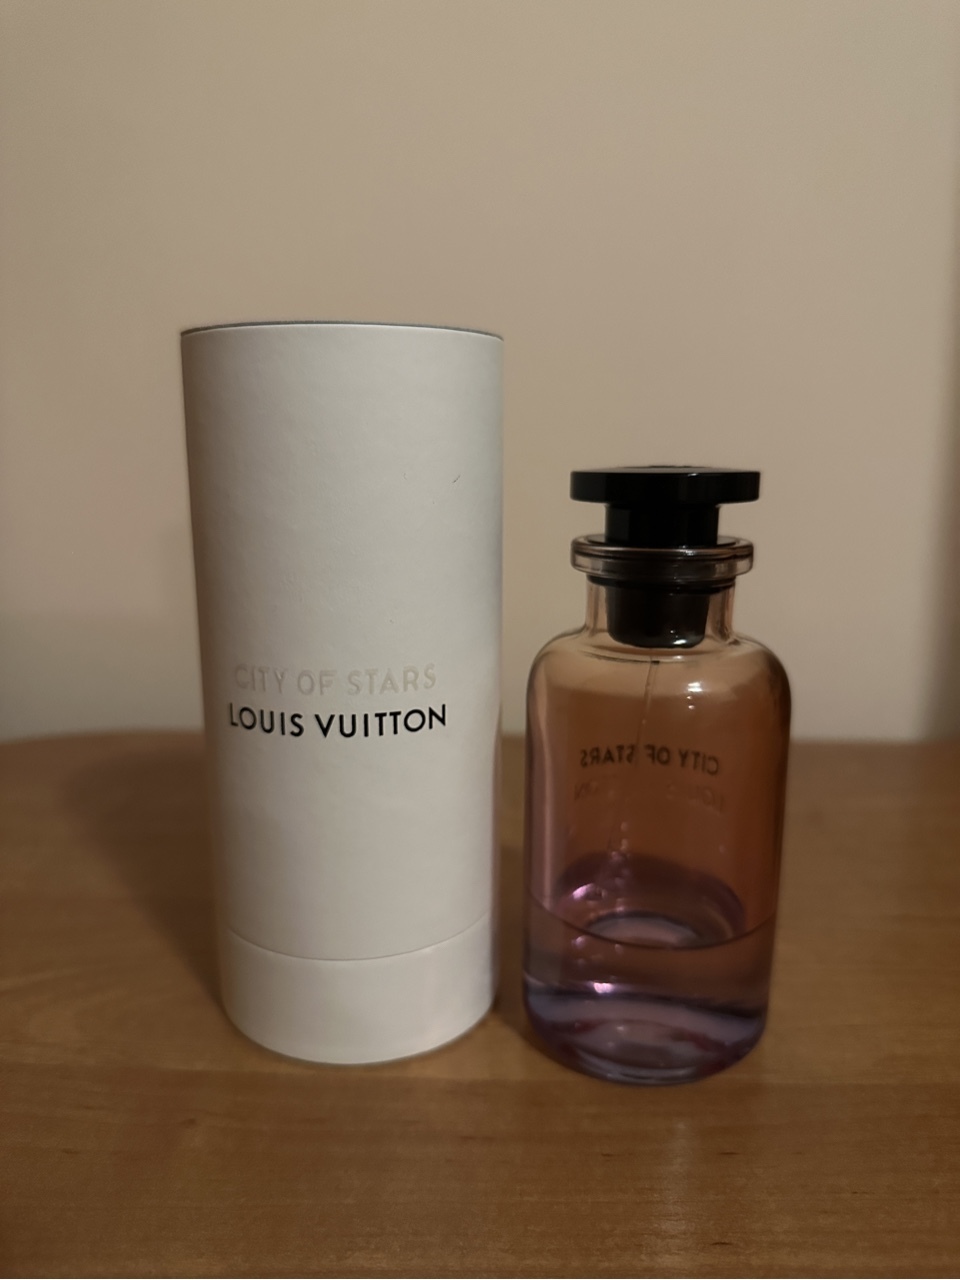 City Of Stars Louis Vuitton perfumy - to nowe perfumy dla kobiet i